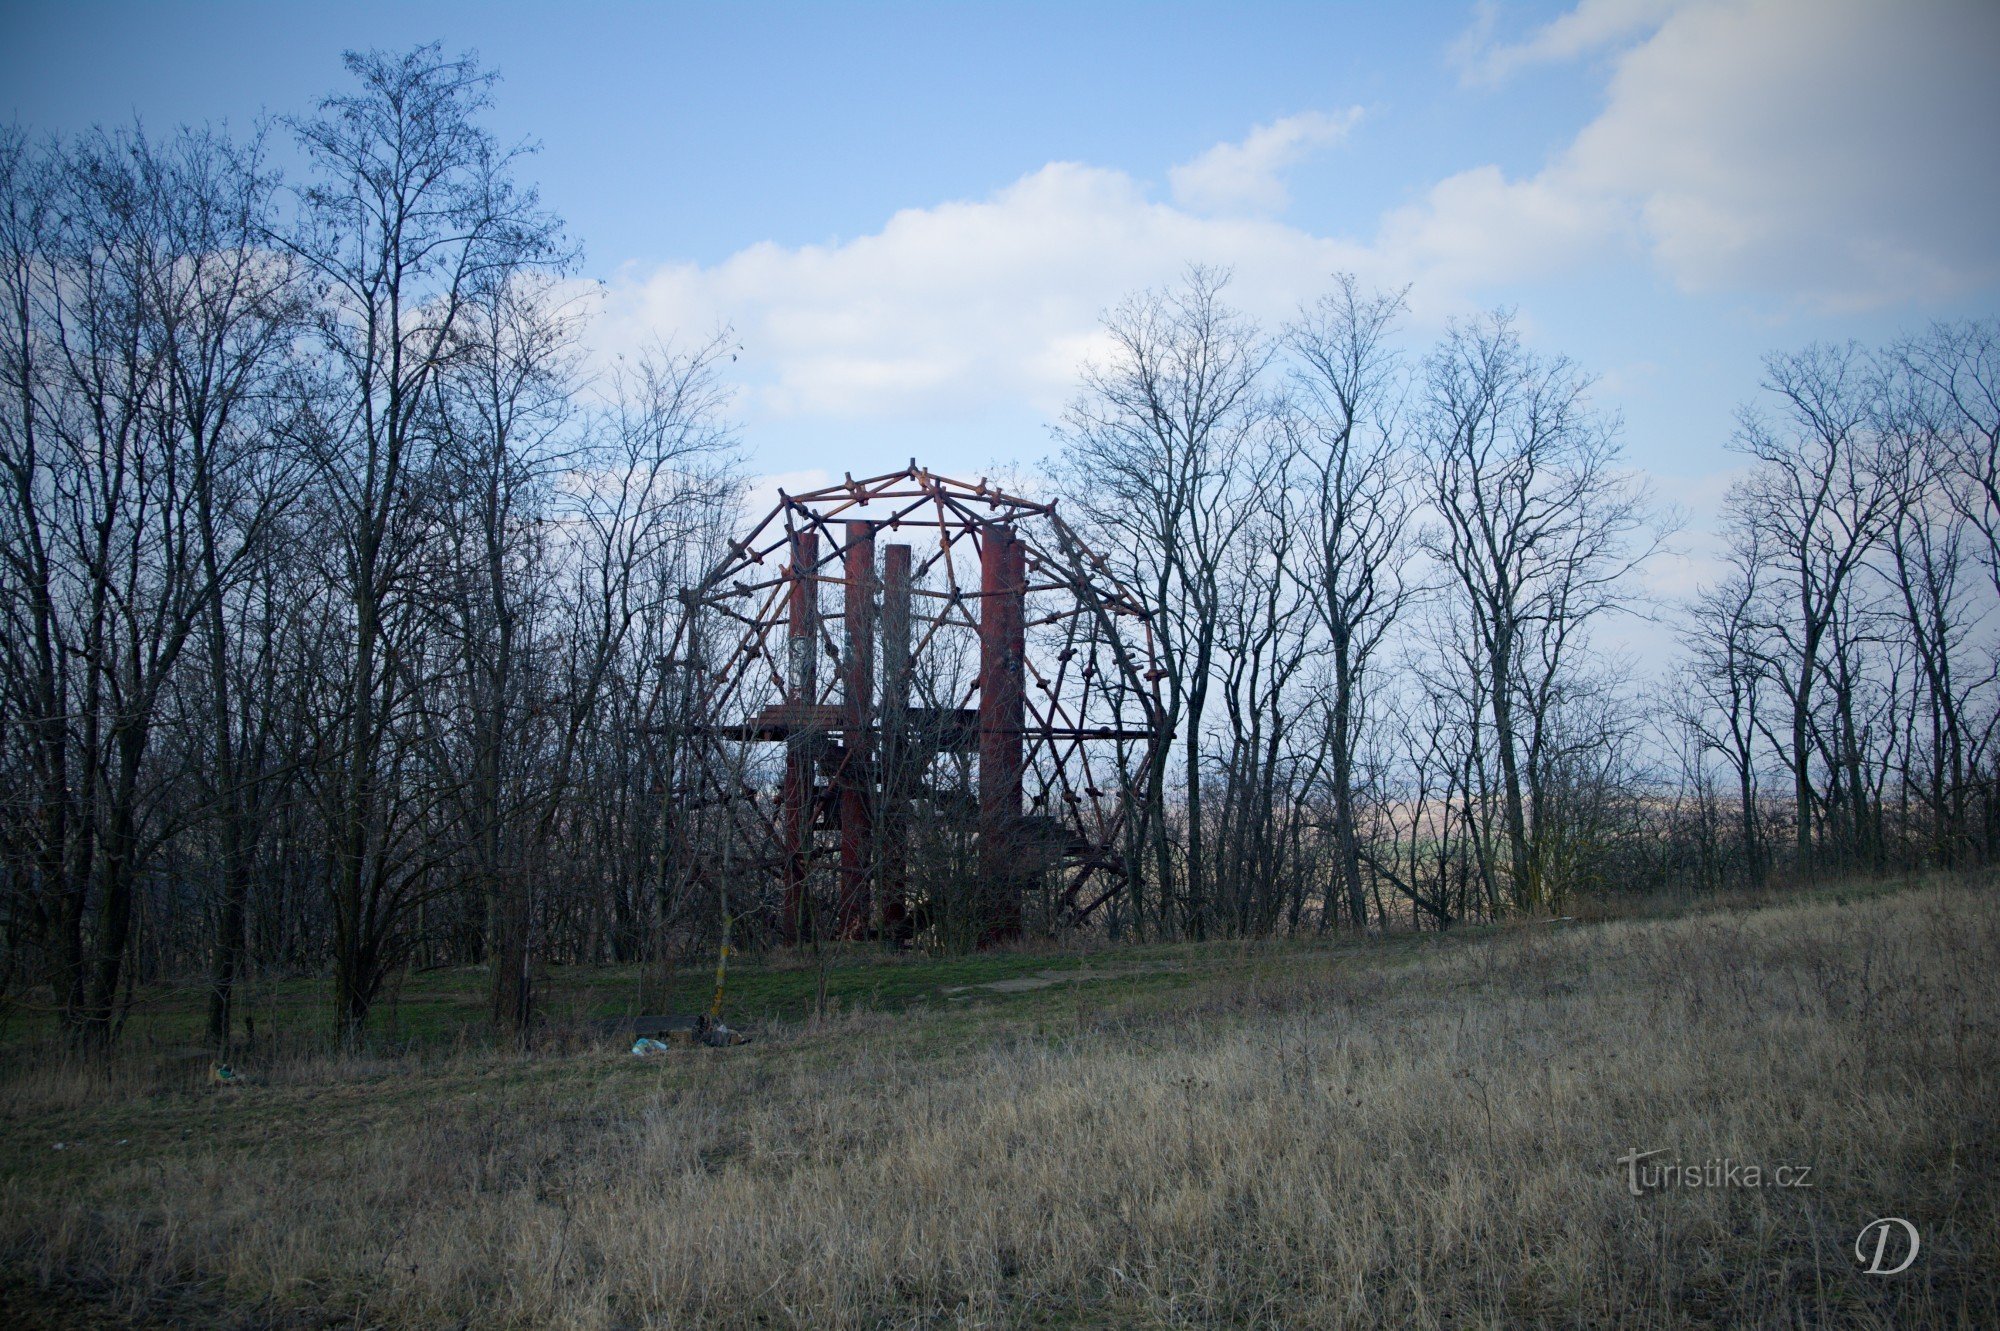 Monument op de Čertoraj-heuvel